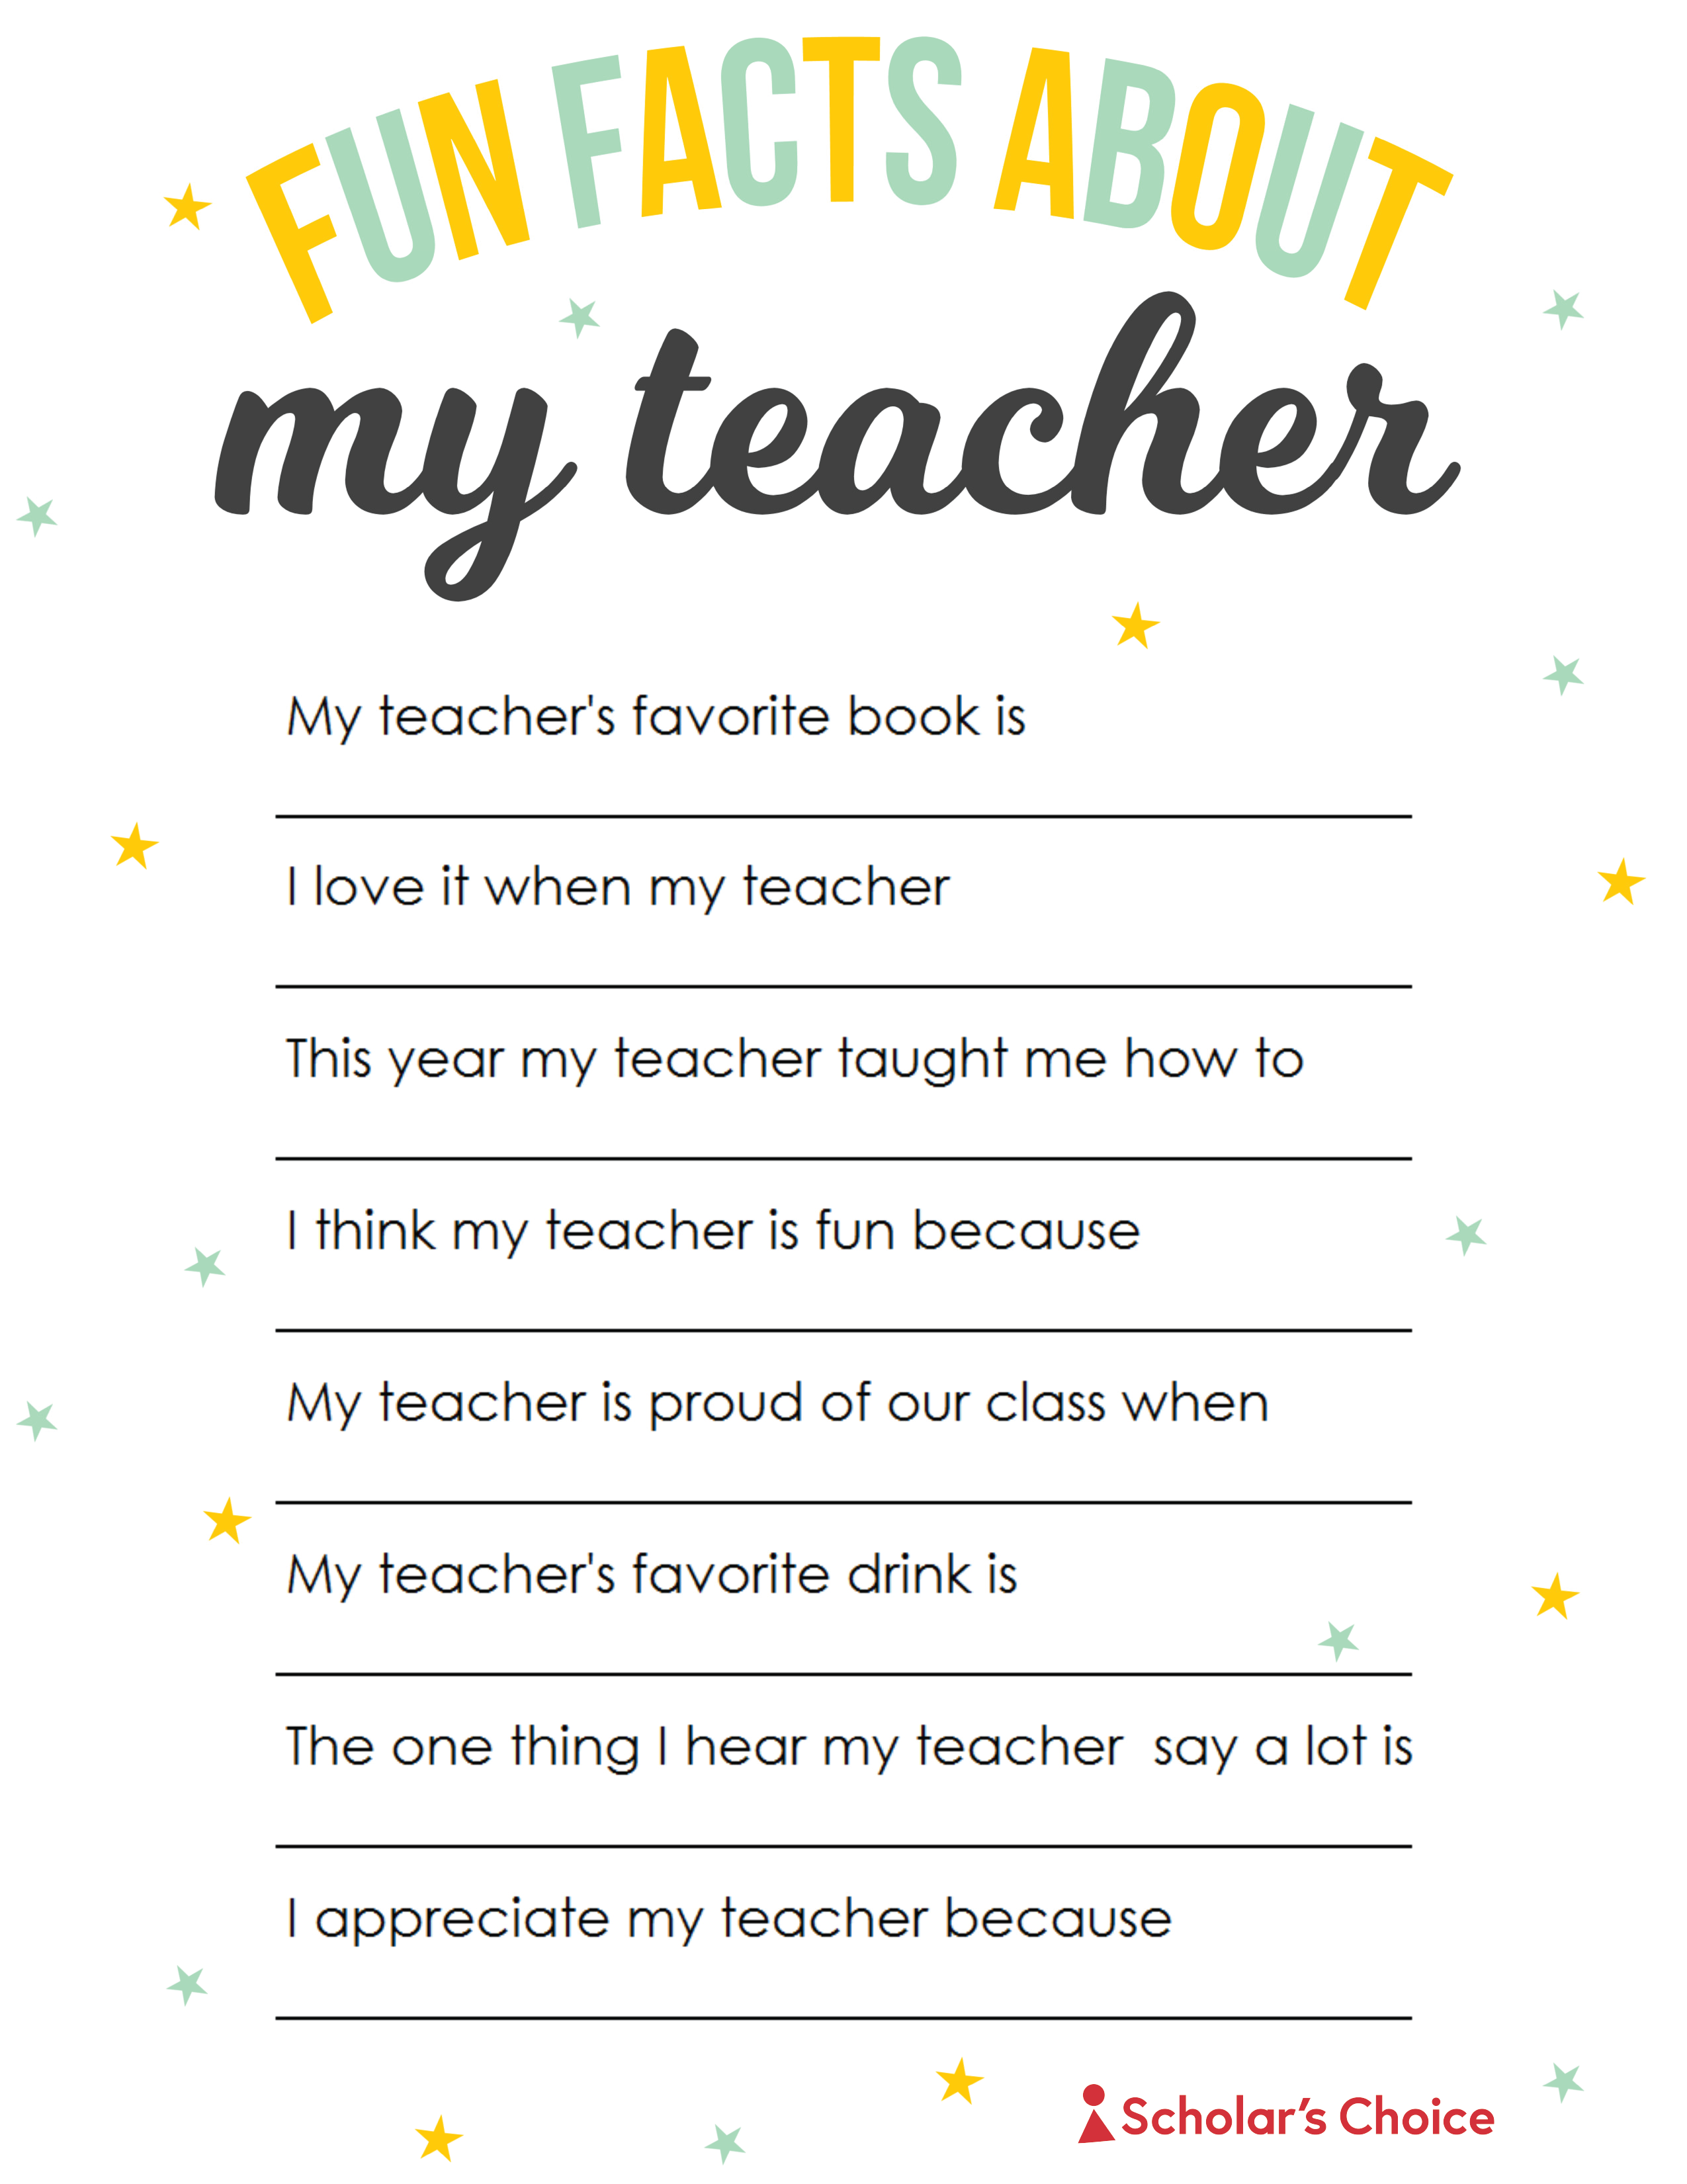 teacher-appreciation-07